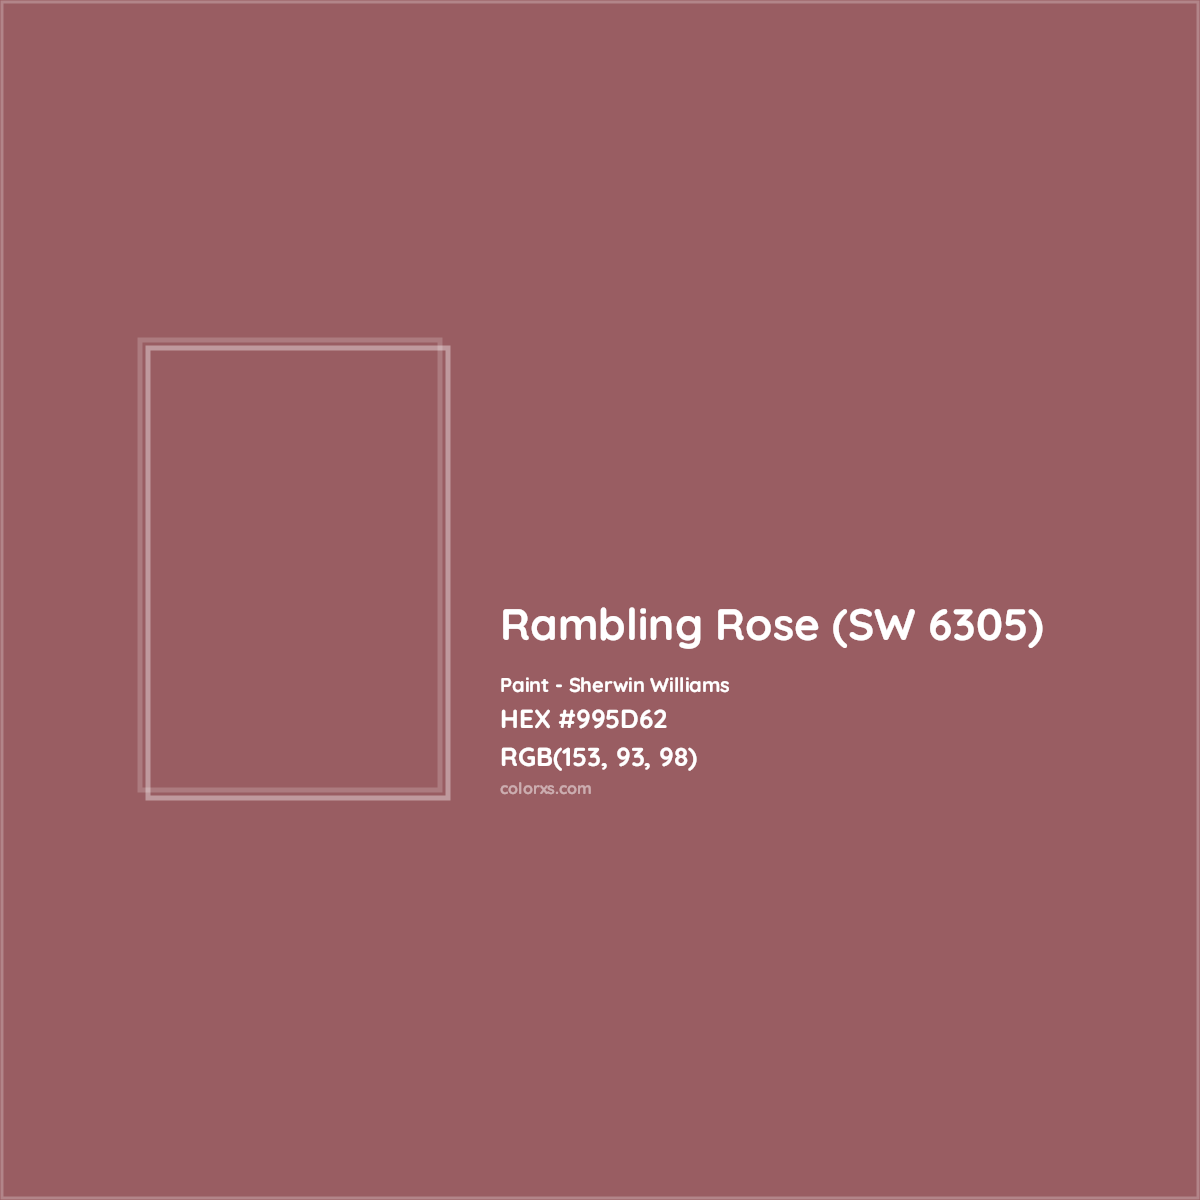 HEX #995D62 Rambling Rose (SW 6305) Paint Sherwin Williams - Color Code